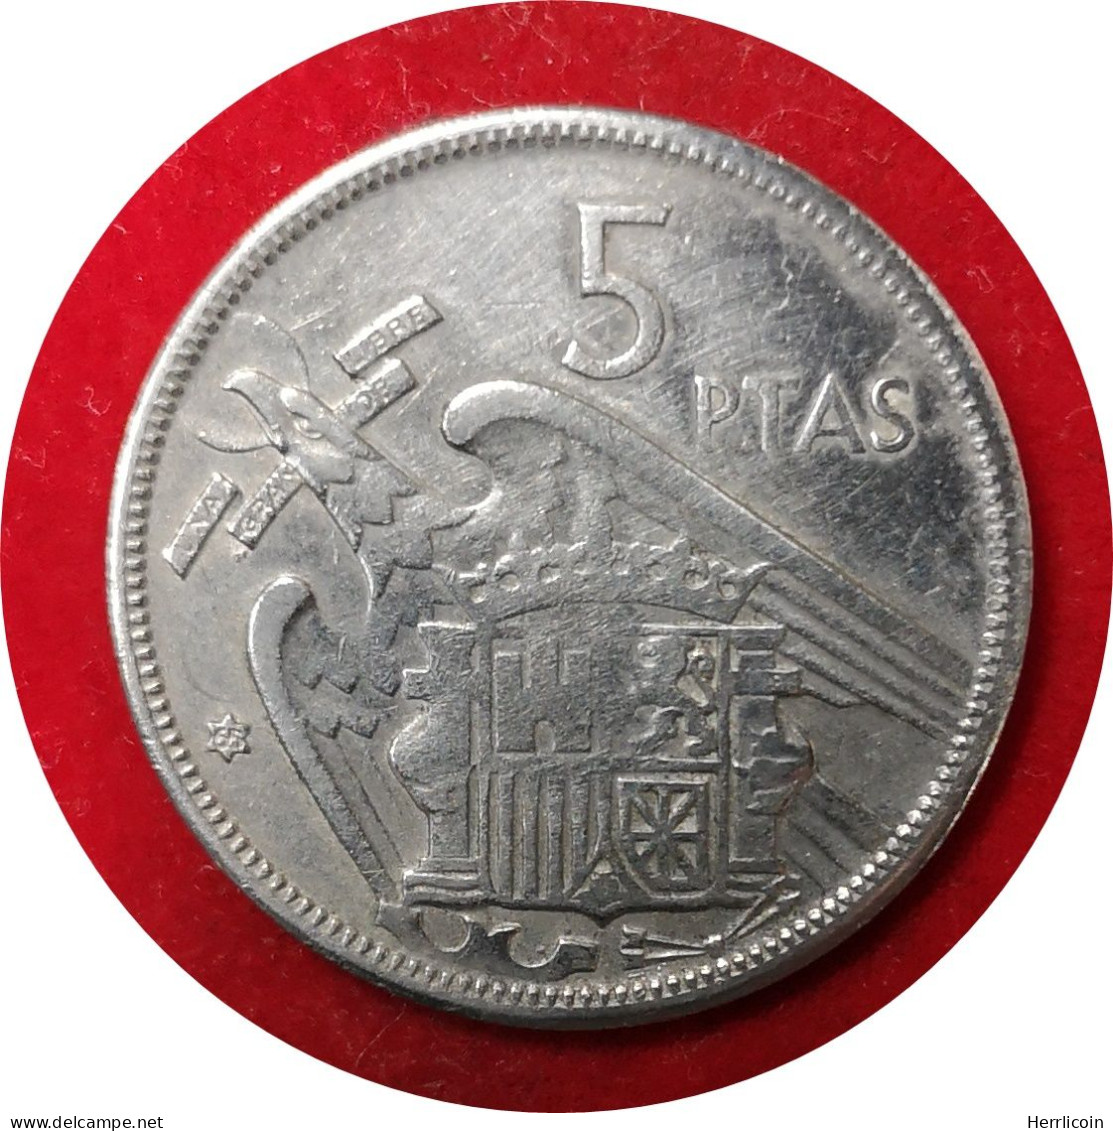 Monnaie Espagne - 1957 (1965) - 5 Pesetas Franco - 5 Pesetas